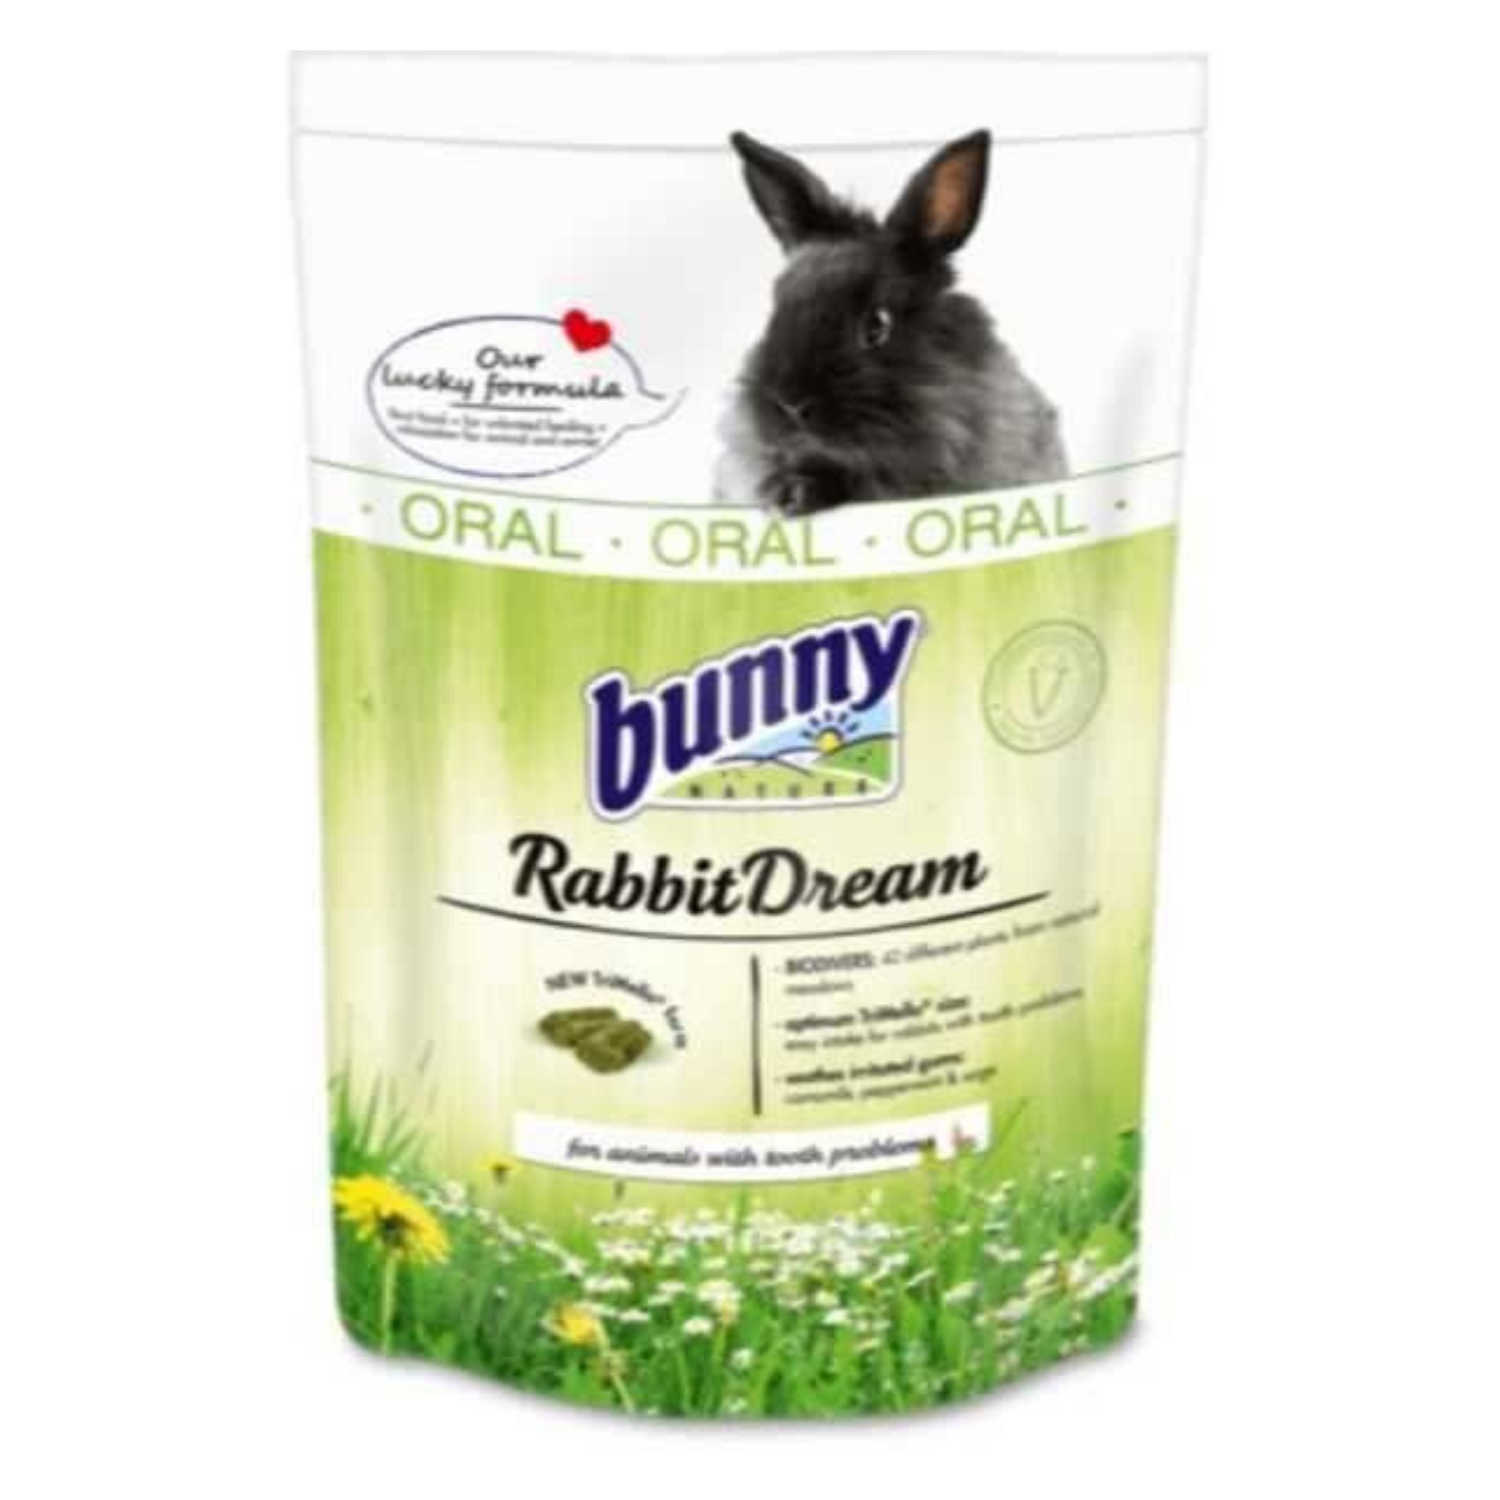 Bunny Nature Rabbit Dream Oral - 750g / 1.5kg